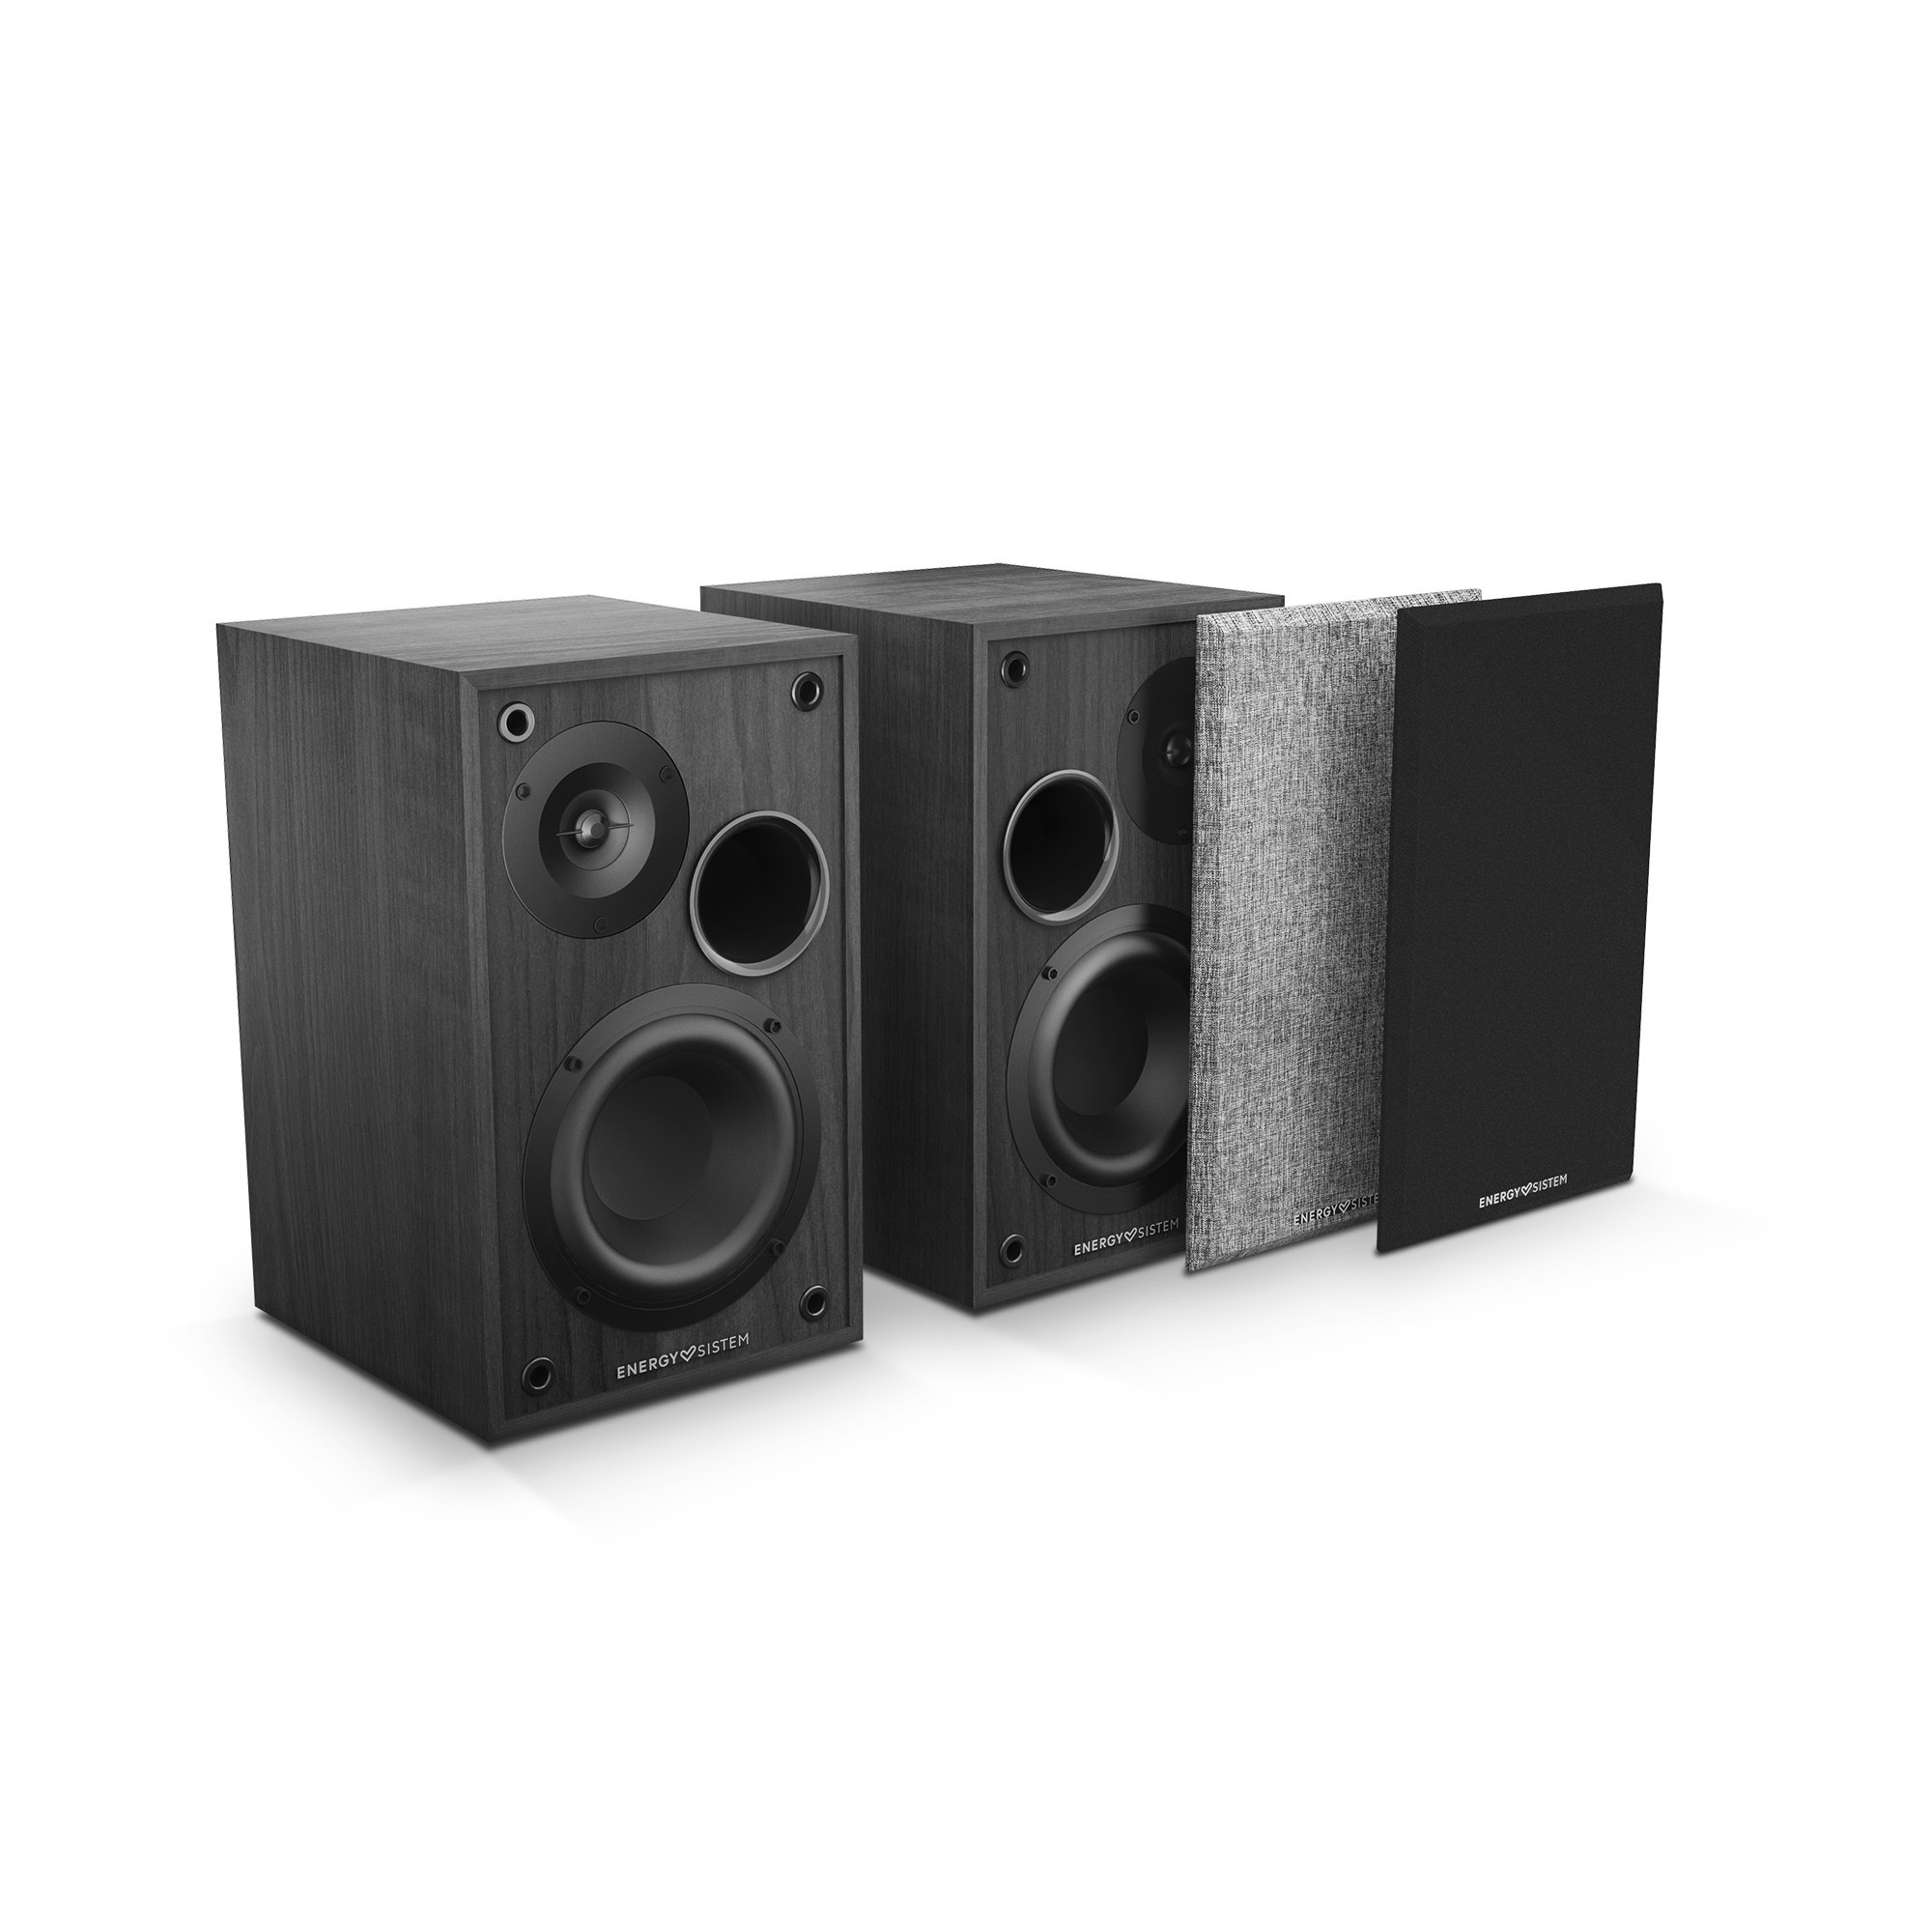 50 W bookshelf speakers with fibreboard casing